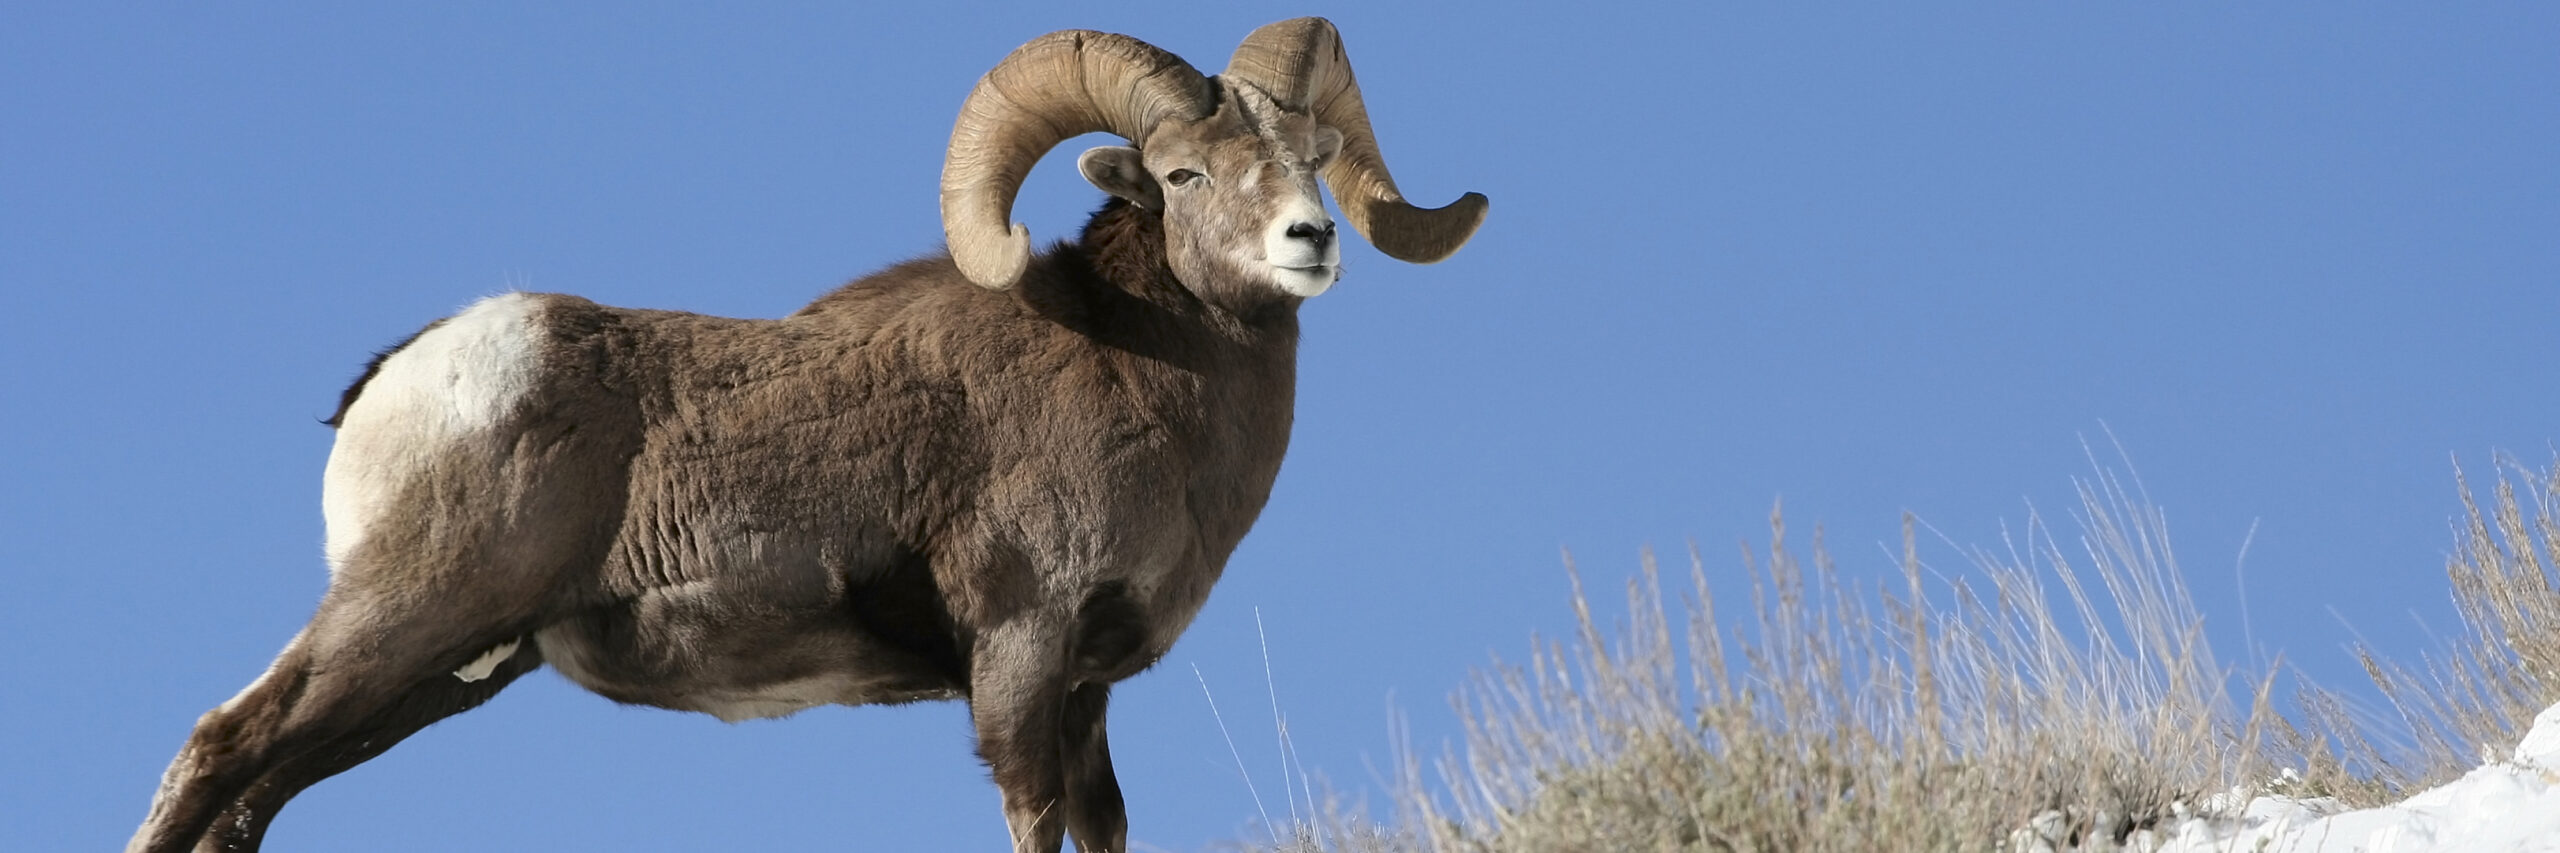 rocky-mountain-bighorn-sheep